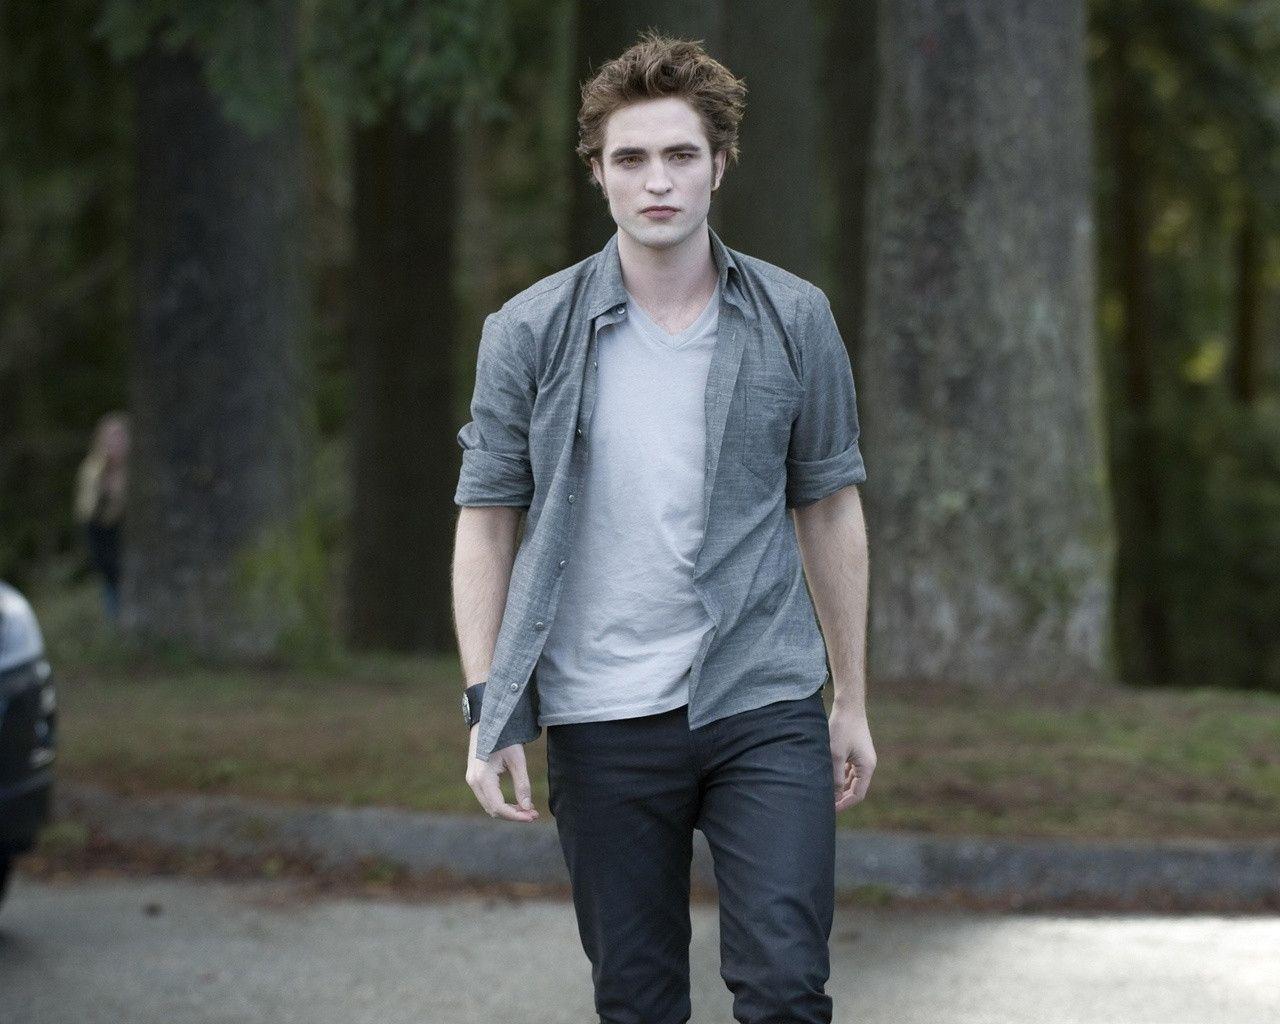 Pattinson Robert Pattinson In Twilight Exclusive HD